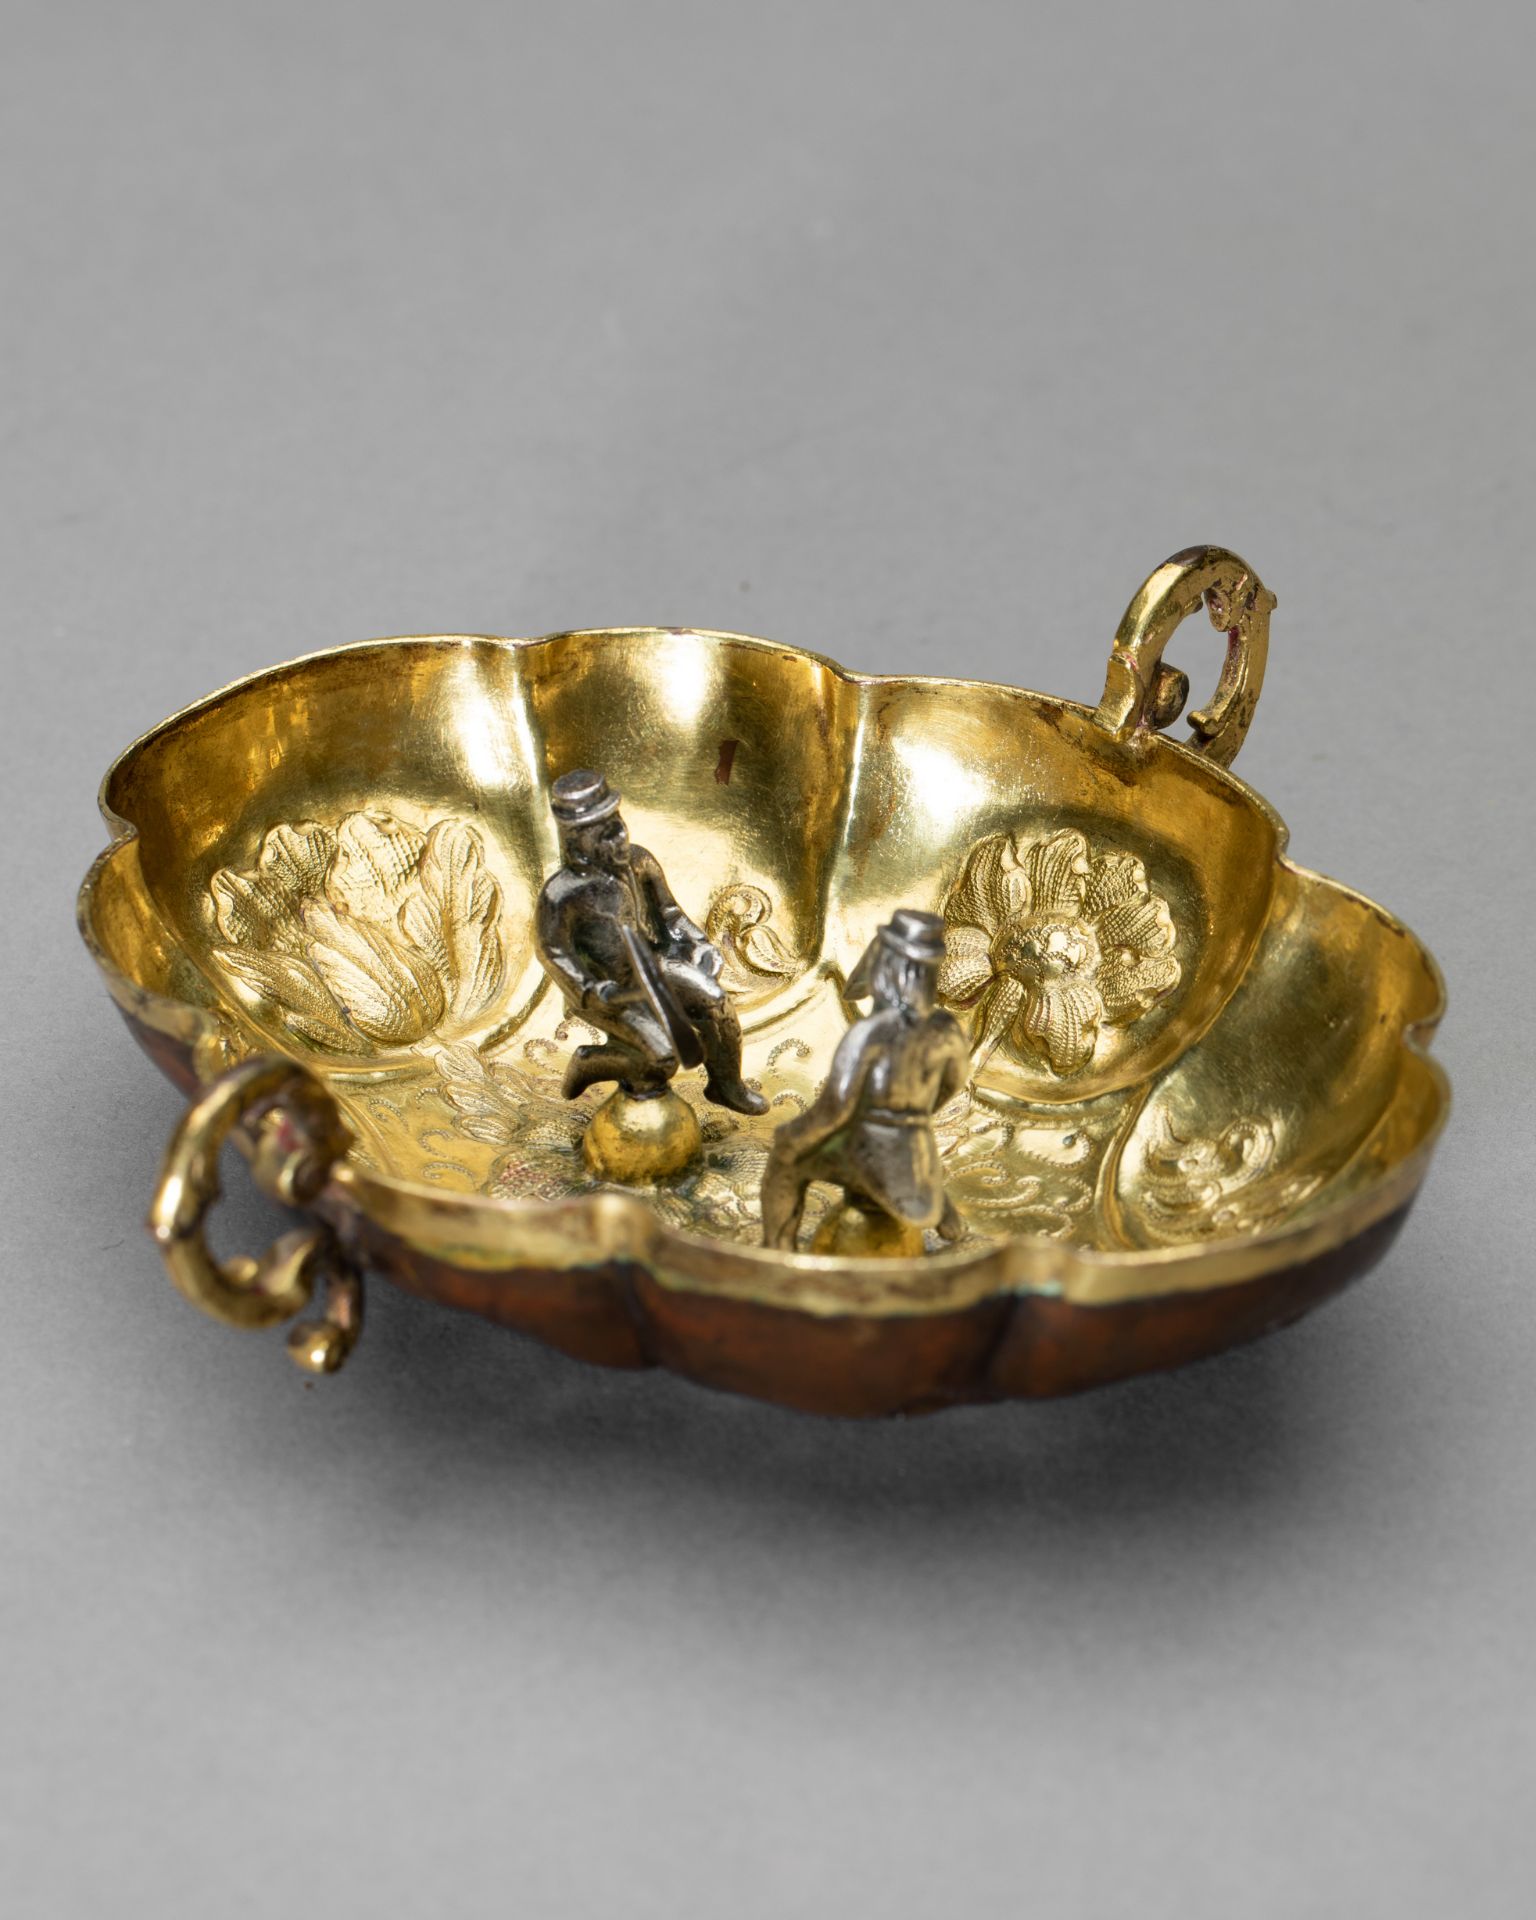 Herrengrund, Gilded winetaste copperbowl with miner figurines